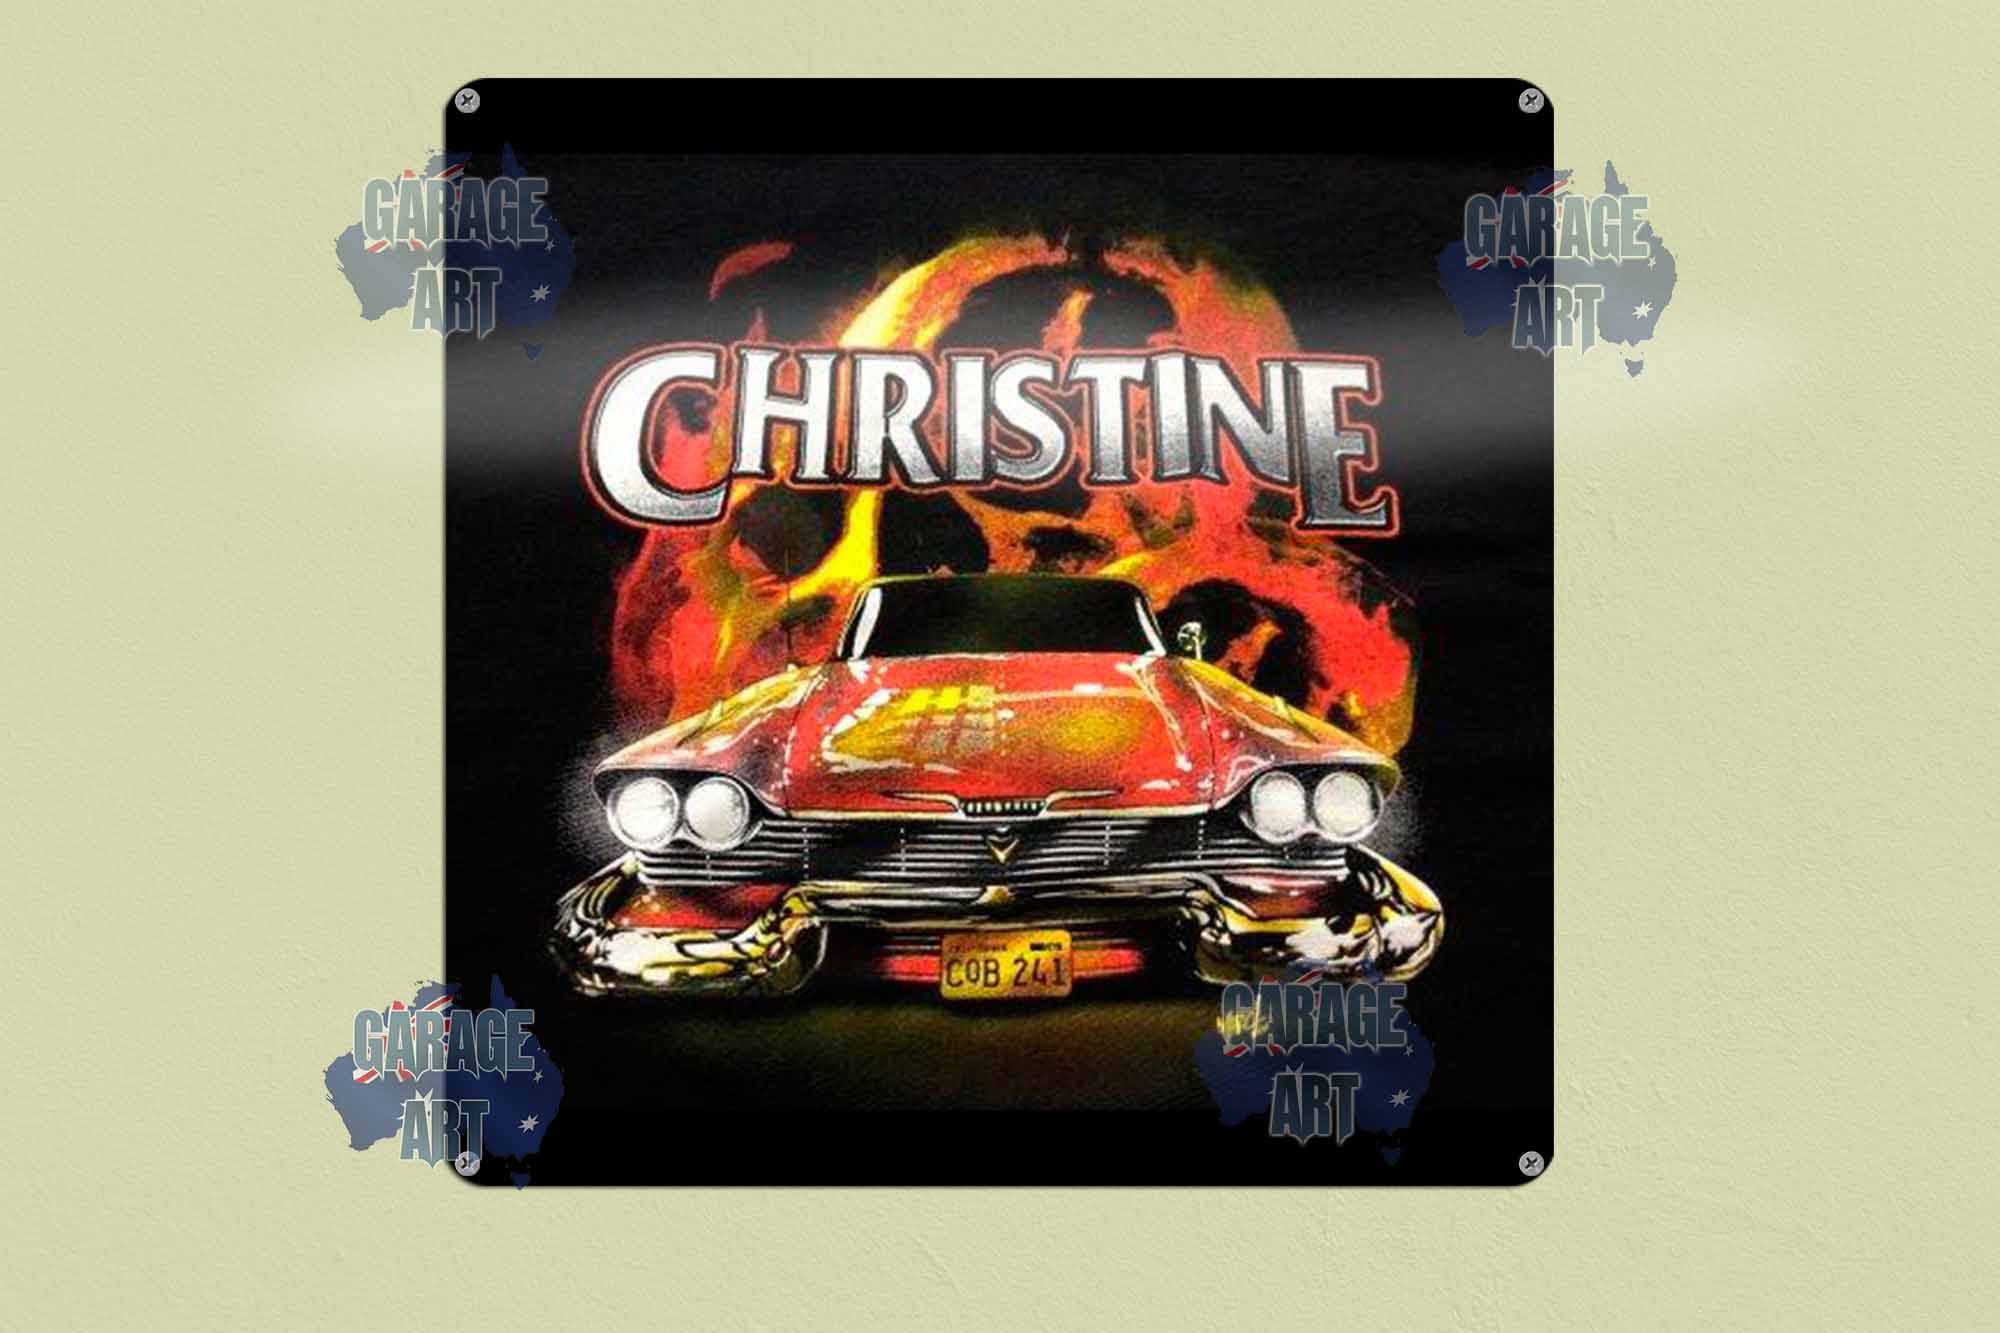 Christine 300mmx300mm Tin Sign freeshipping - garageartaustralia